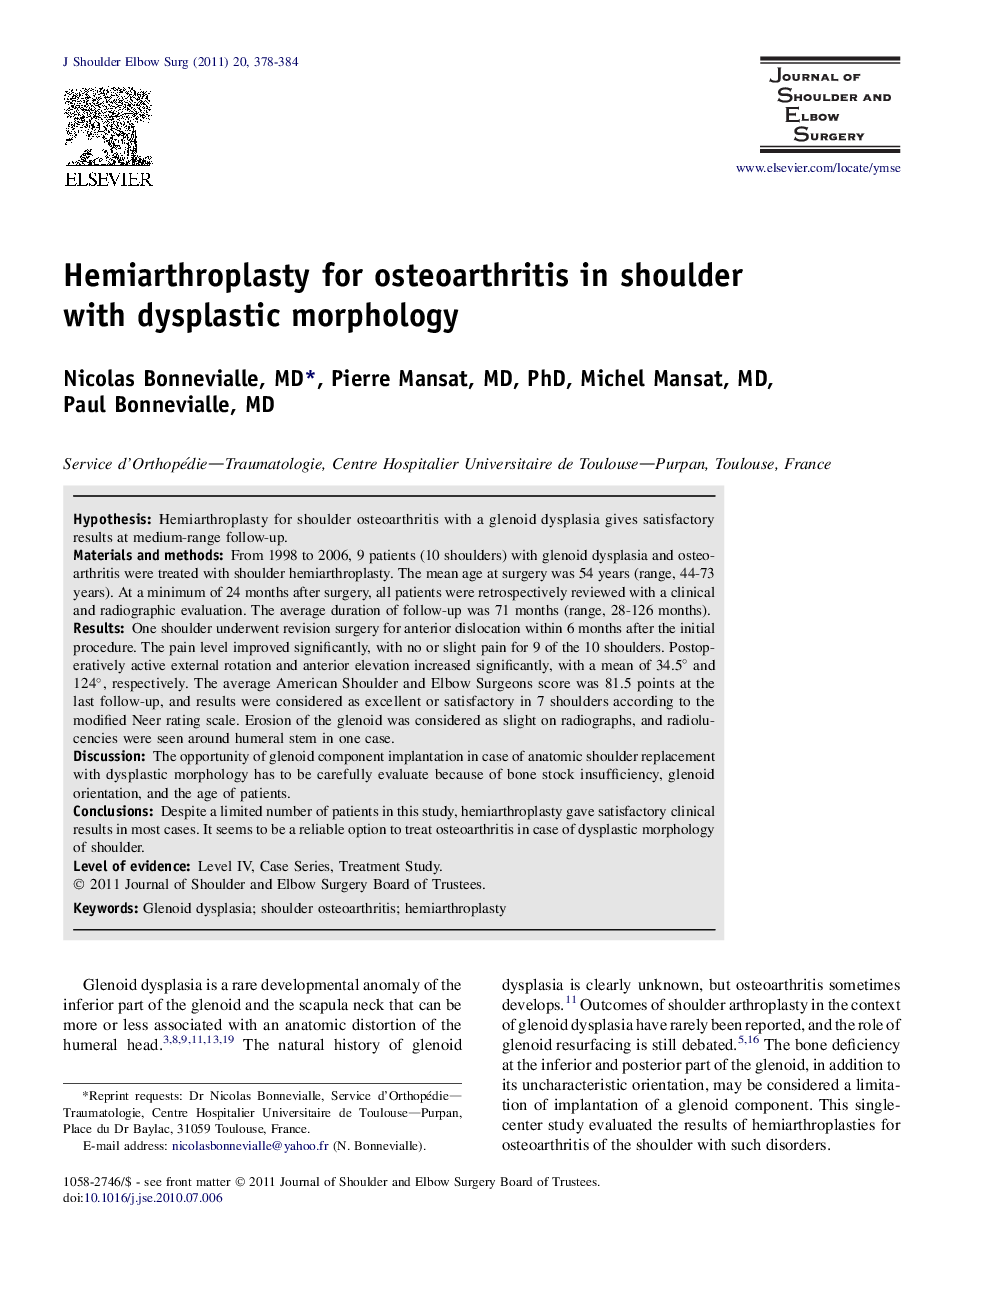 Hemiarthroplasty for osteoarthritis in shoulder with dysplastic morphology